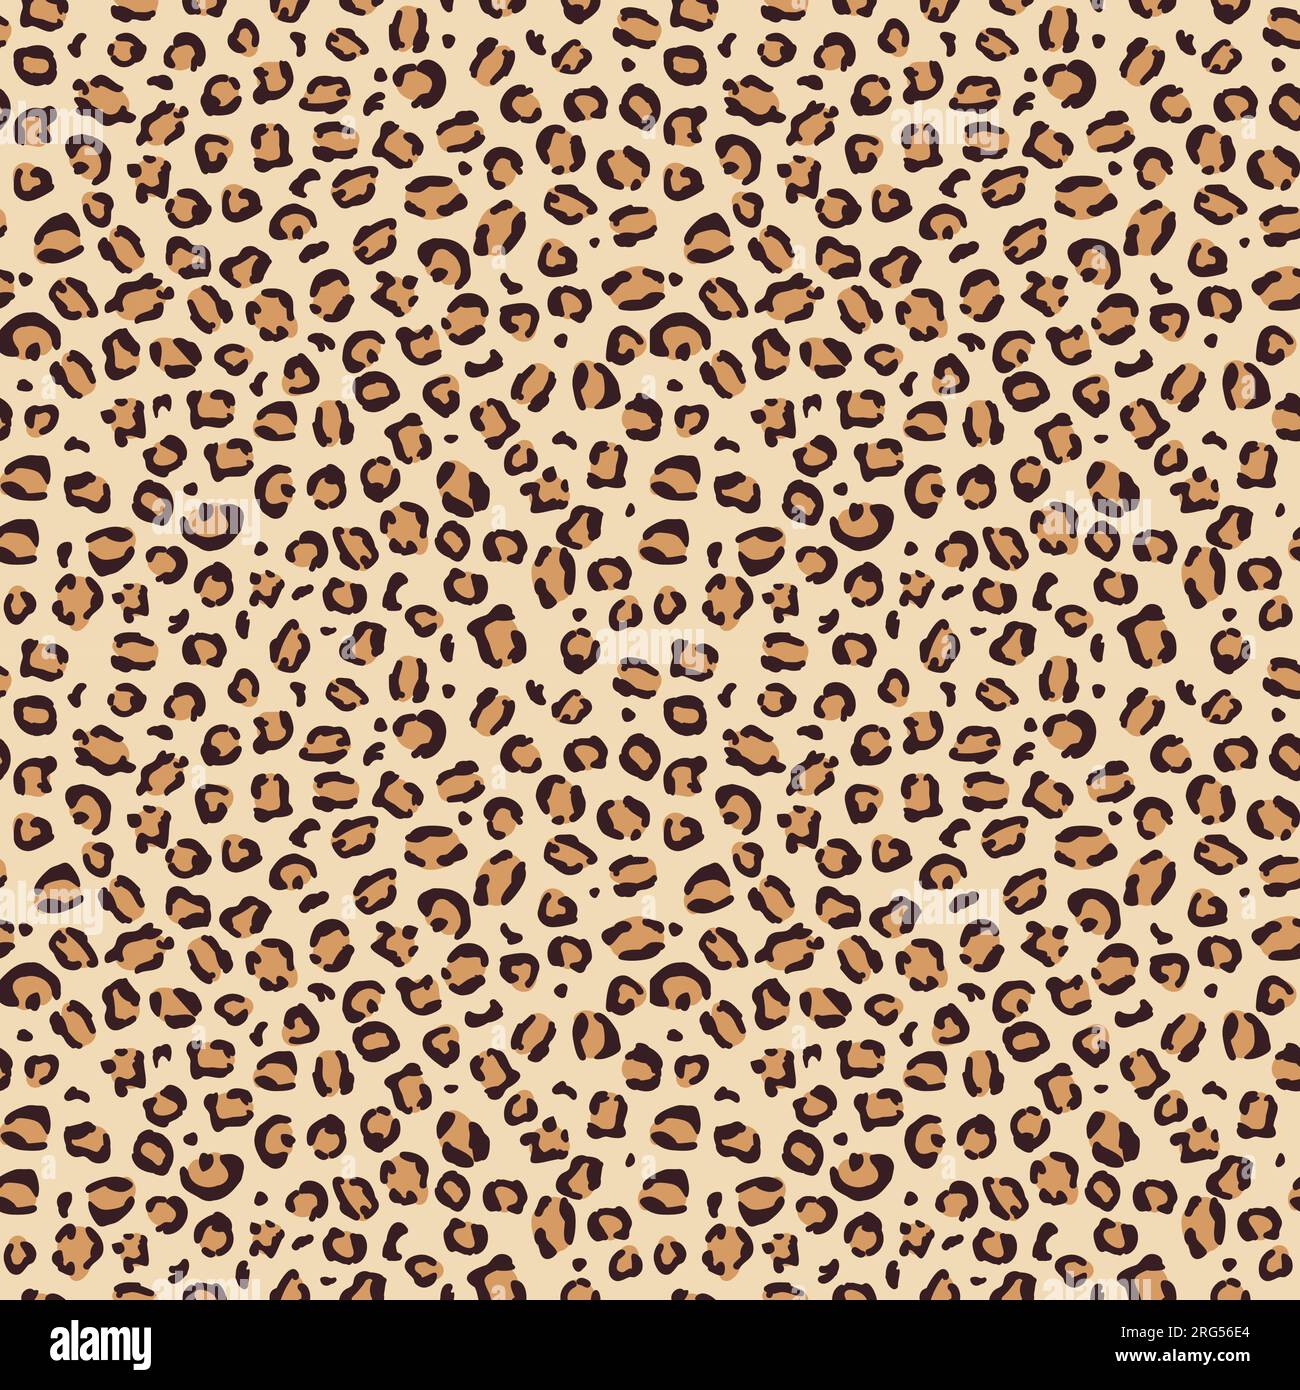 Grey Seamless Leopard pattern design, vector illustration background. Fur  animal skin design illustration for web, fashion, textile, print, and  surface design Stock Vector